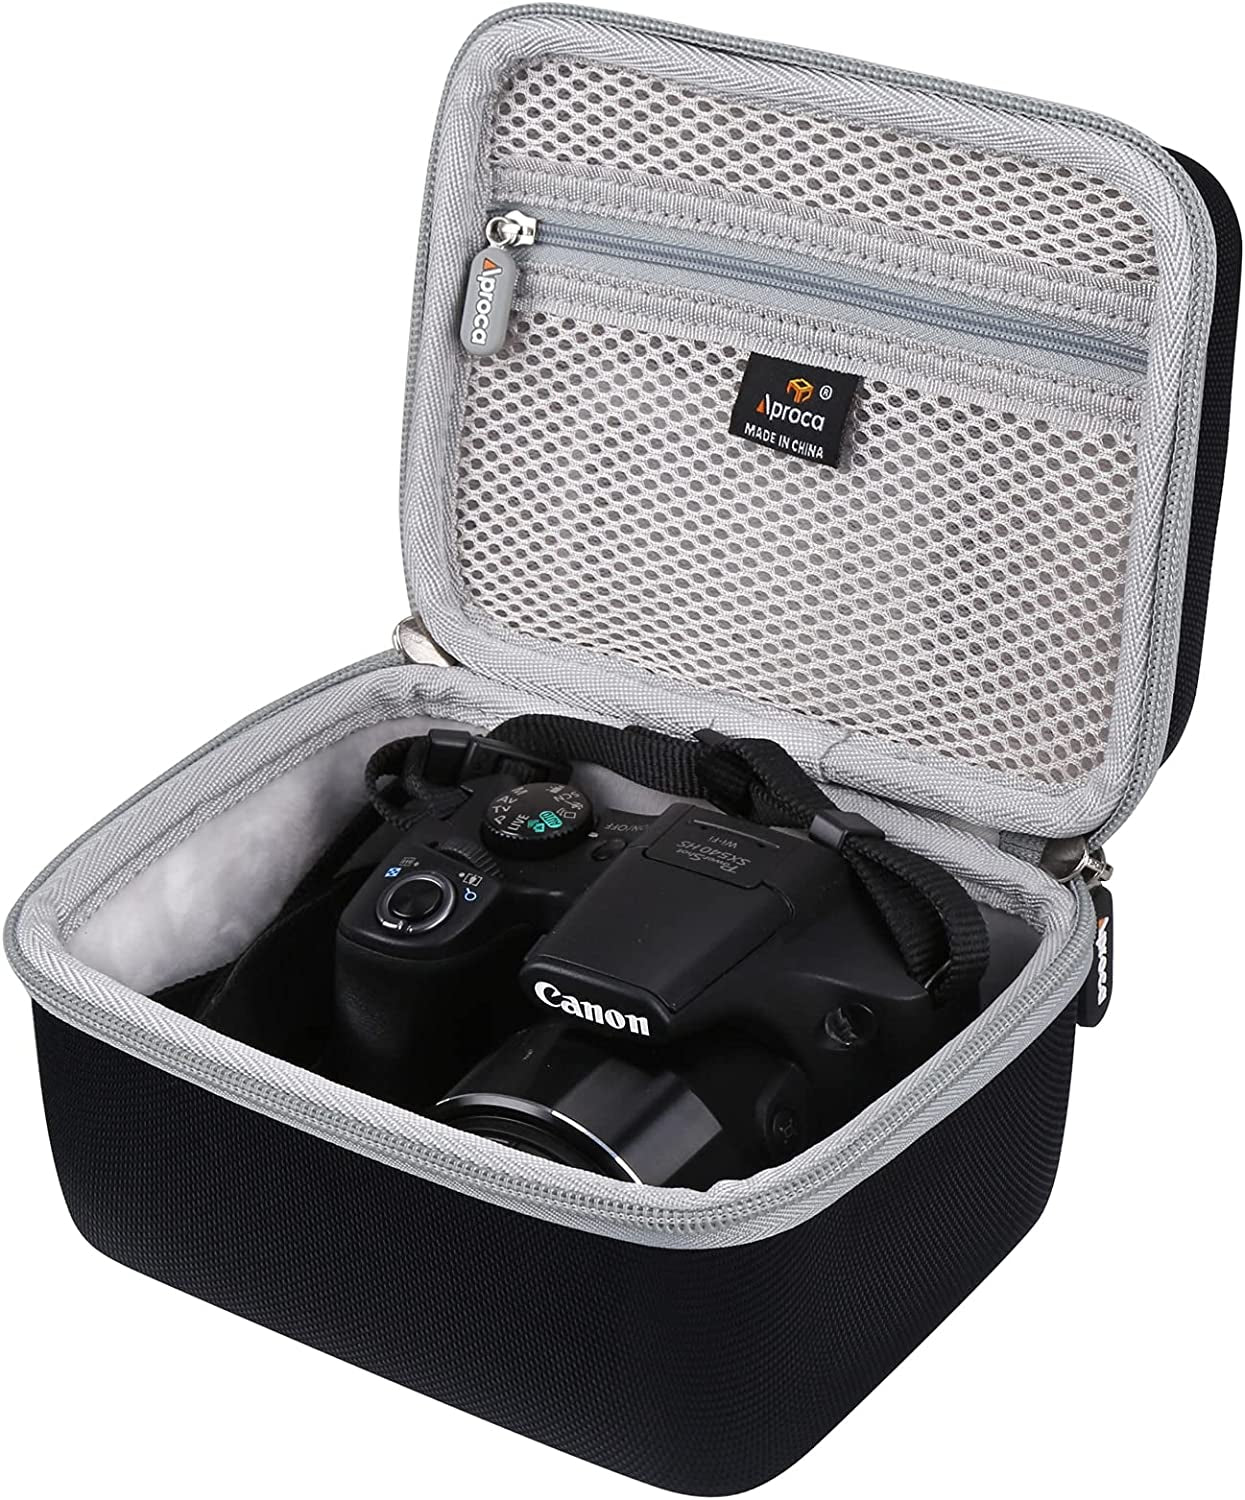 Hard Storage Travel Case for Canon Powershot SX540 Digital Camera